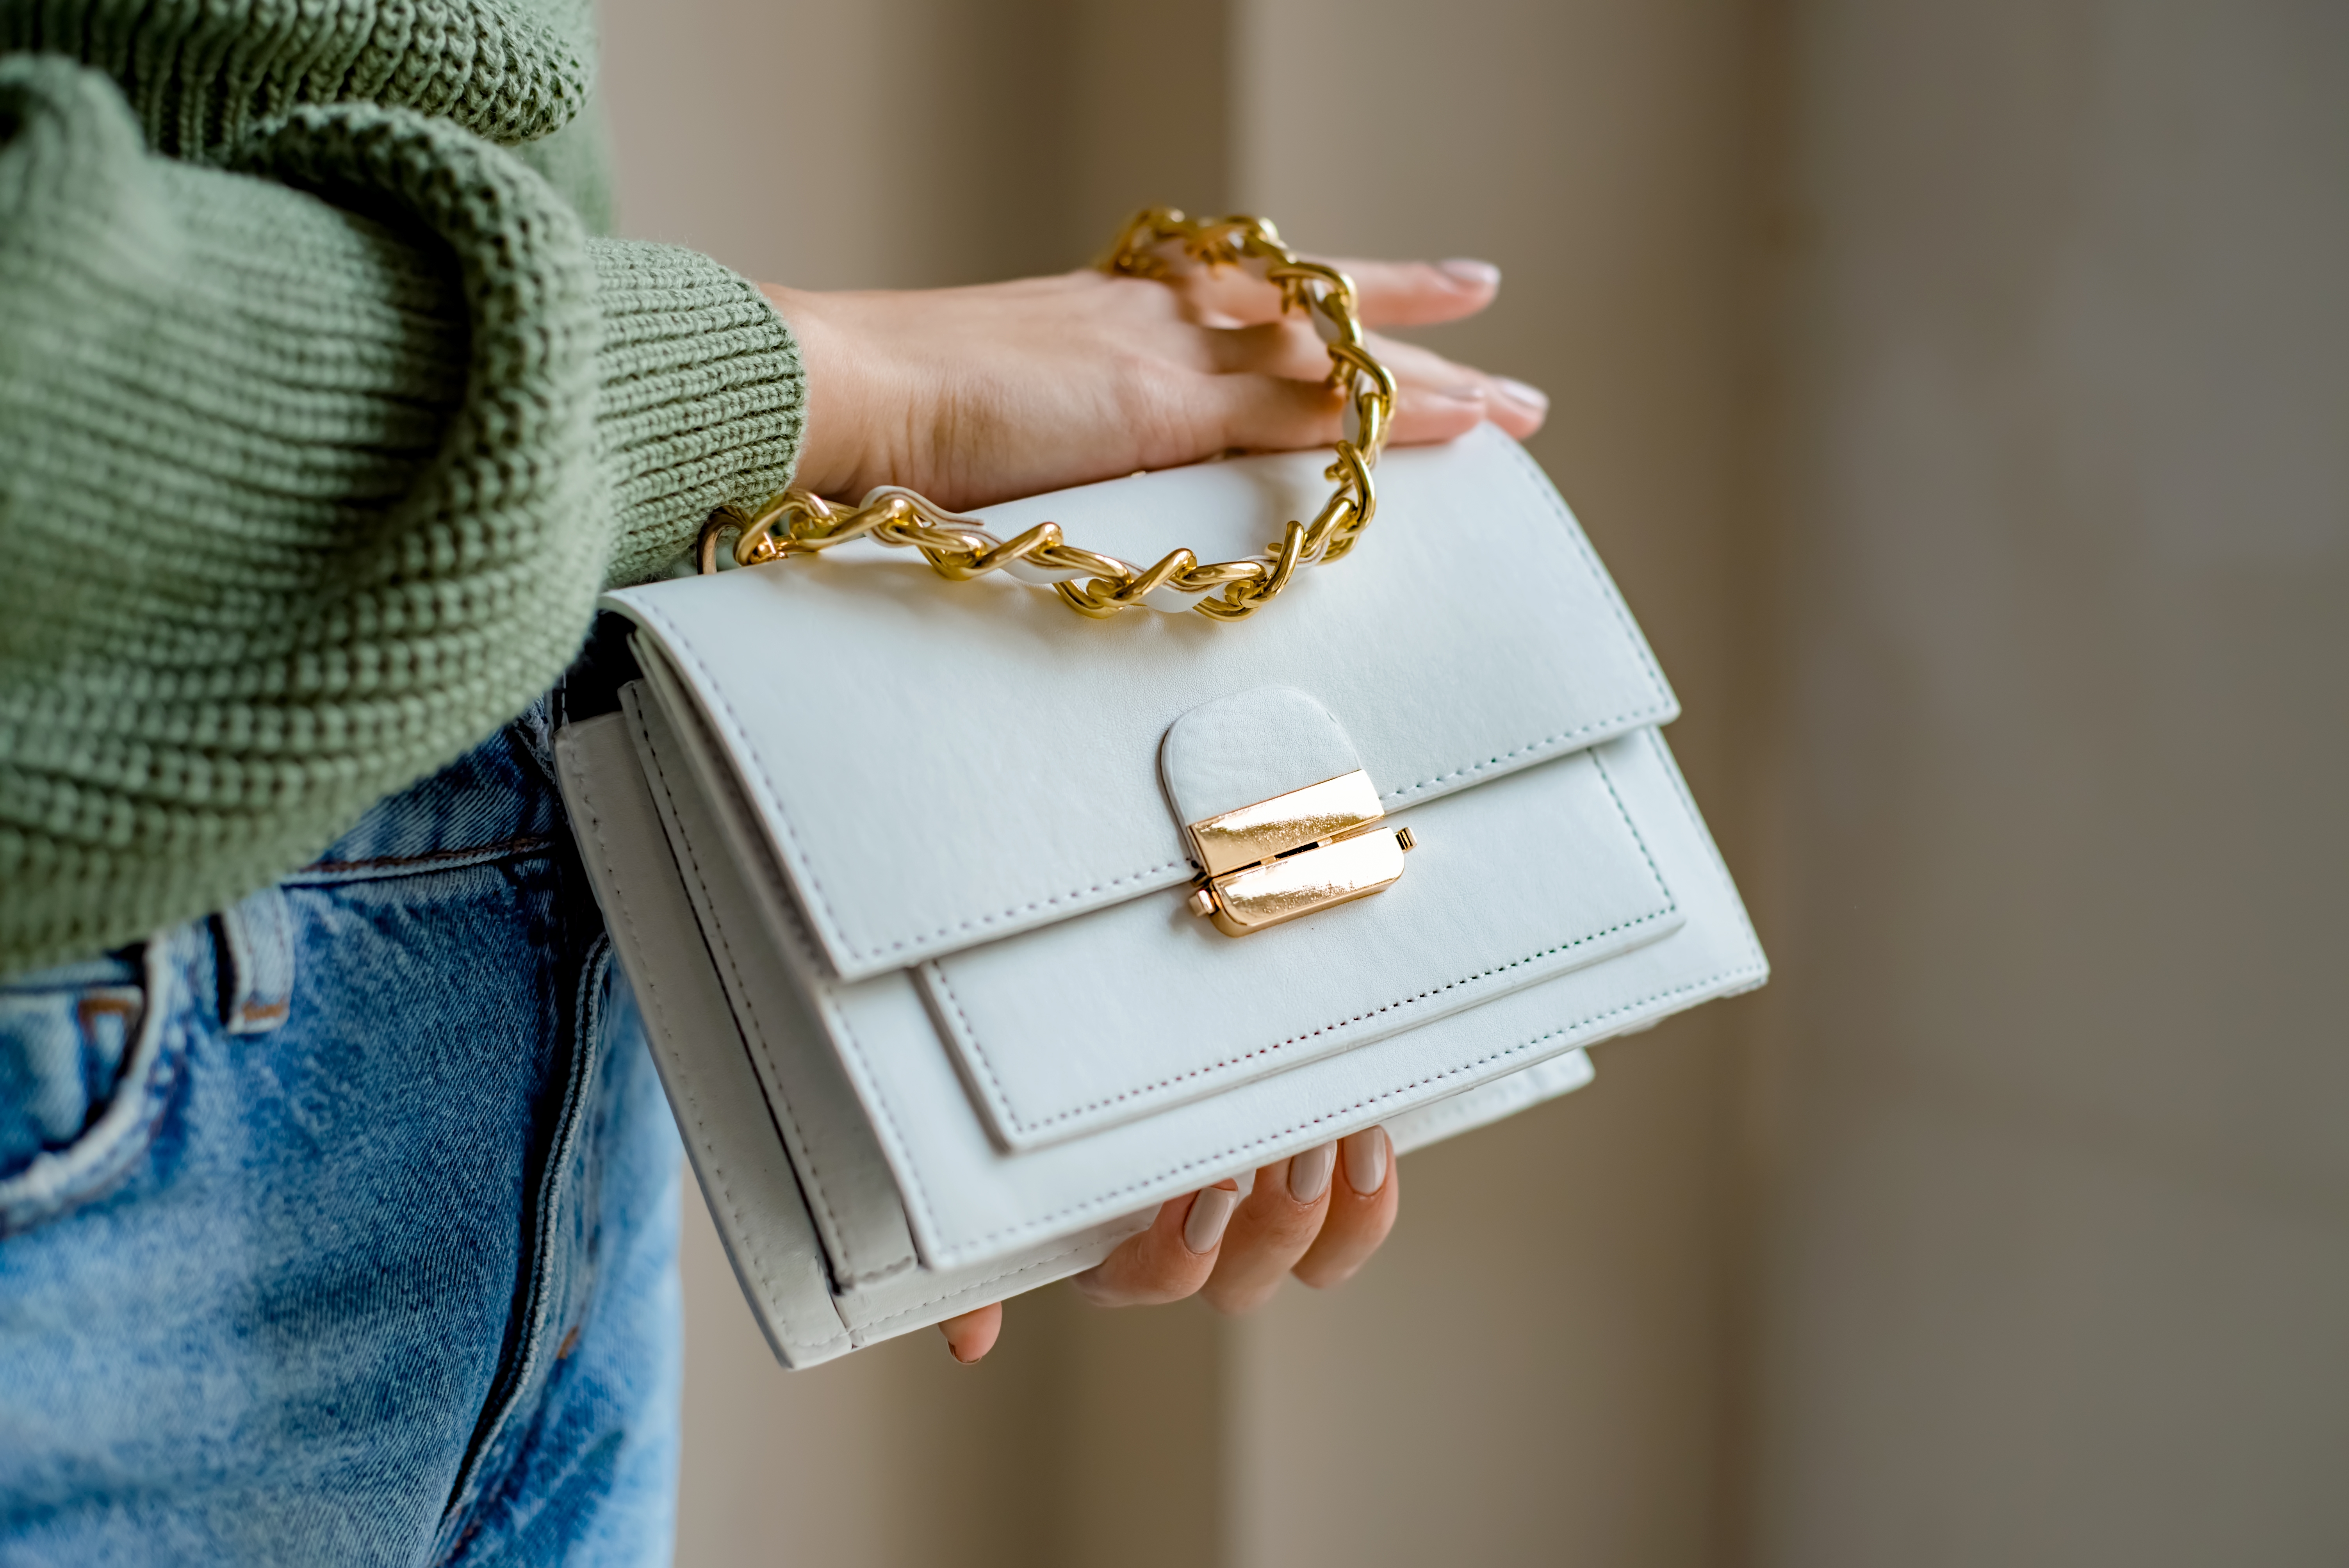 A woman holding a white handbag | Source: Shutterstock